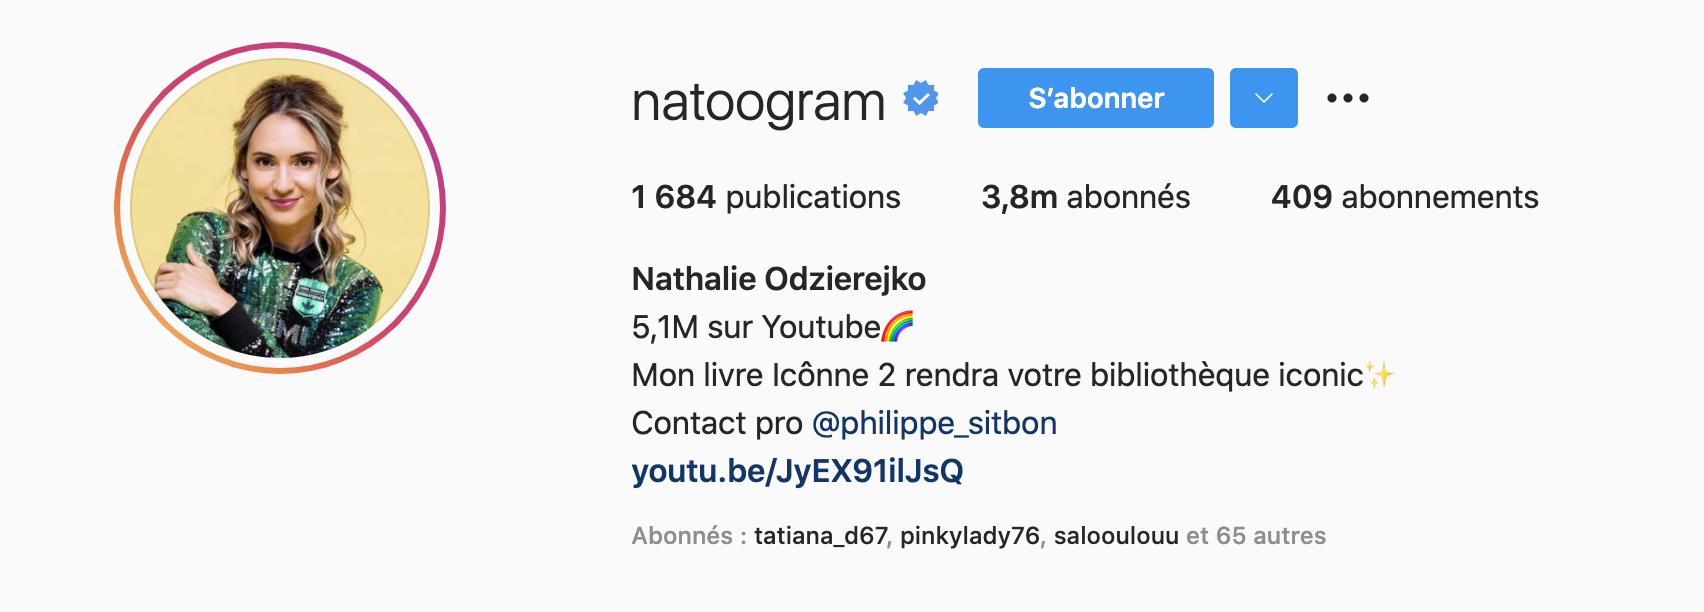 Screenshot du profil instagram de l’influenceuse Natoo